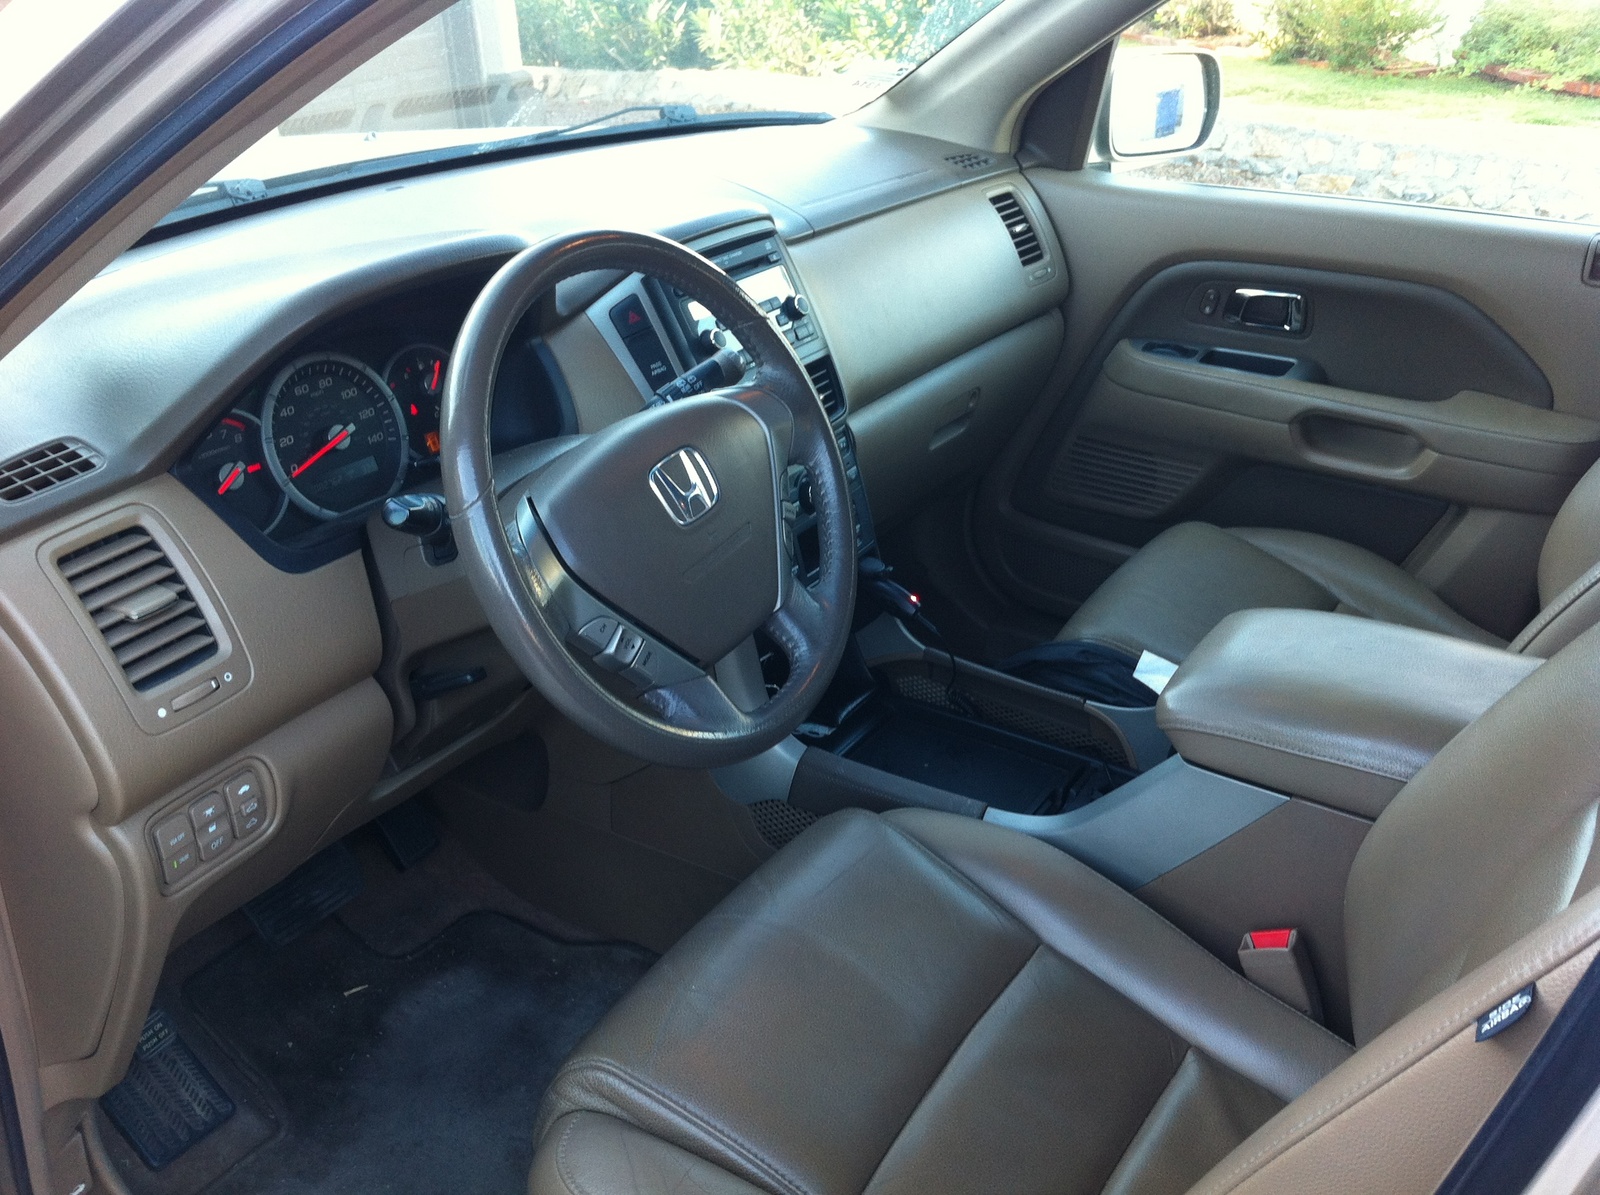 2006 Honda pilot interior dimensions #6